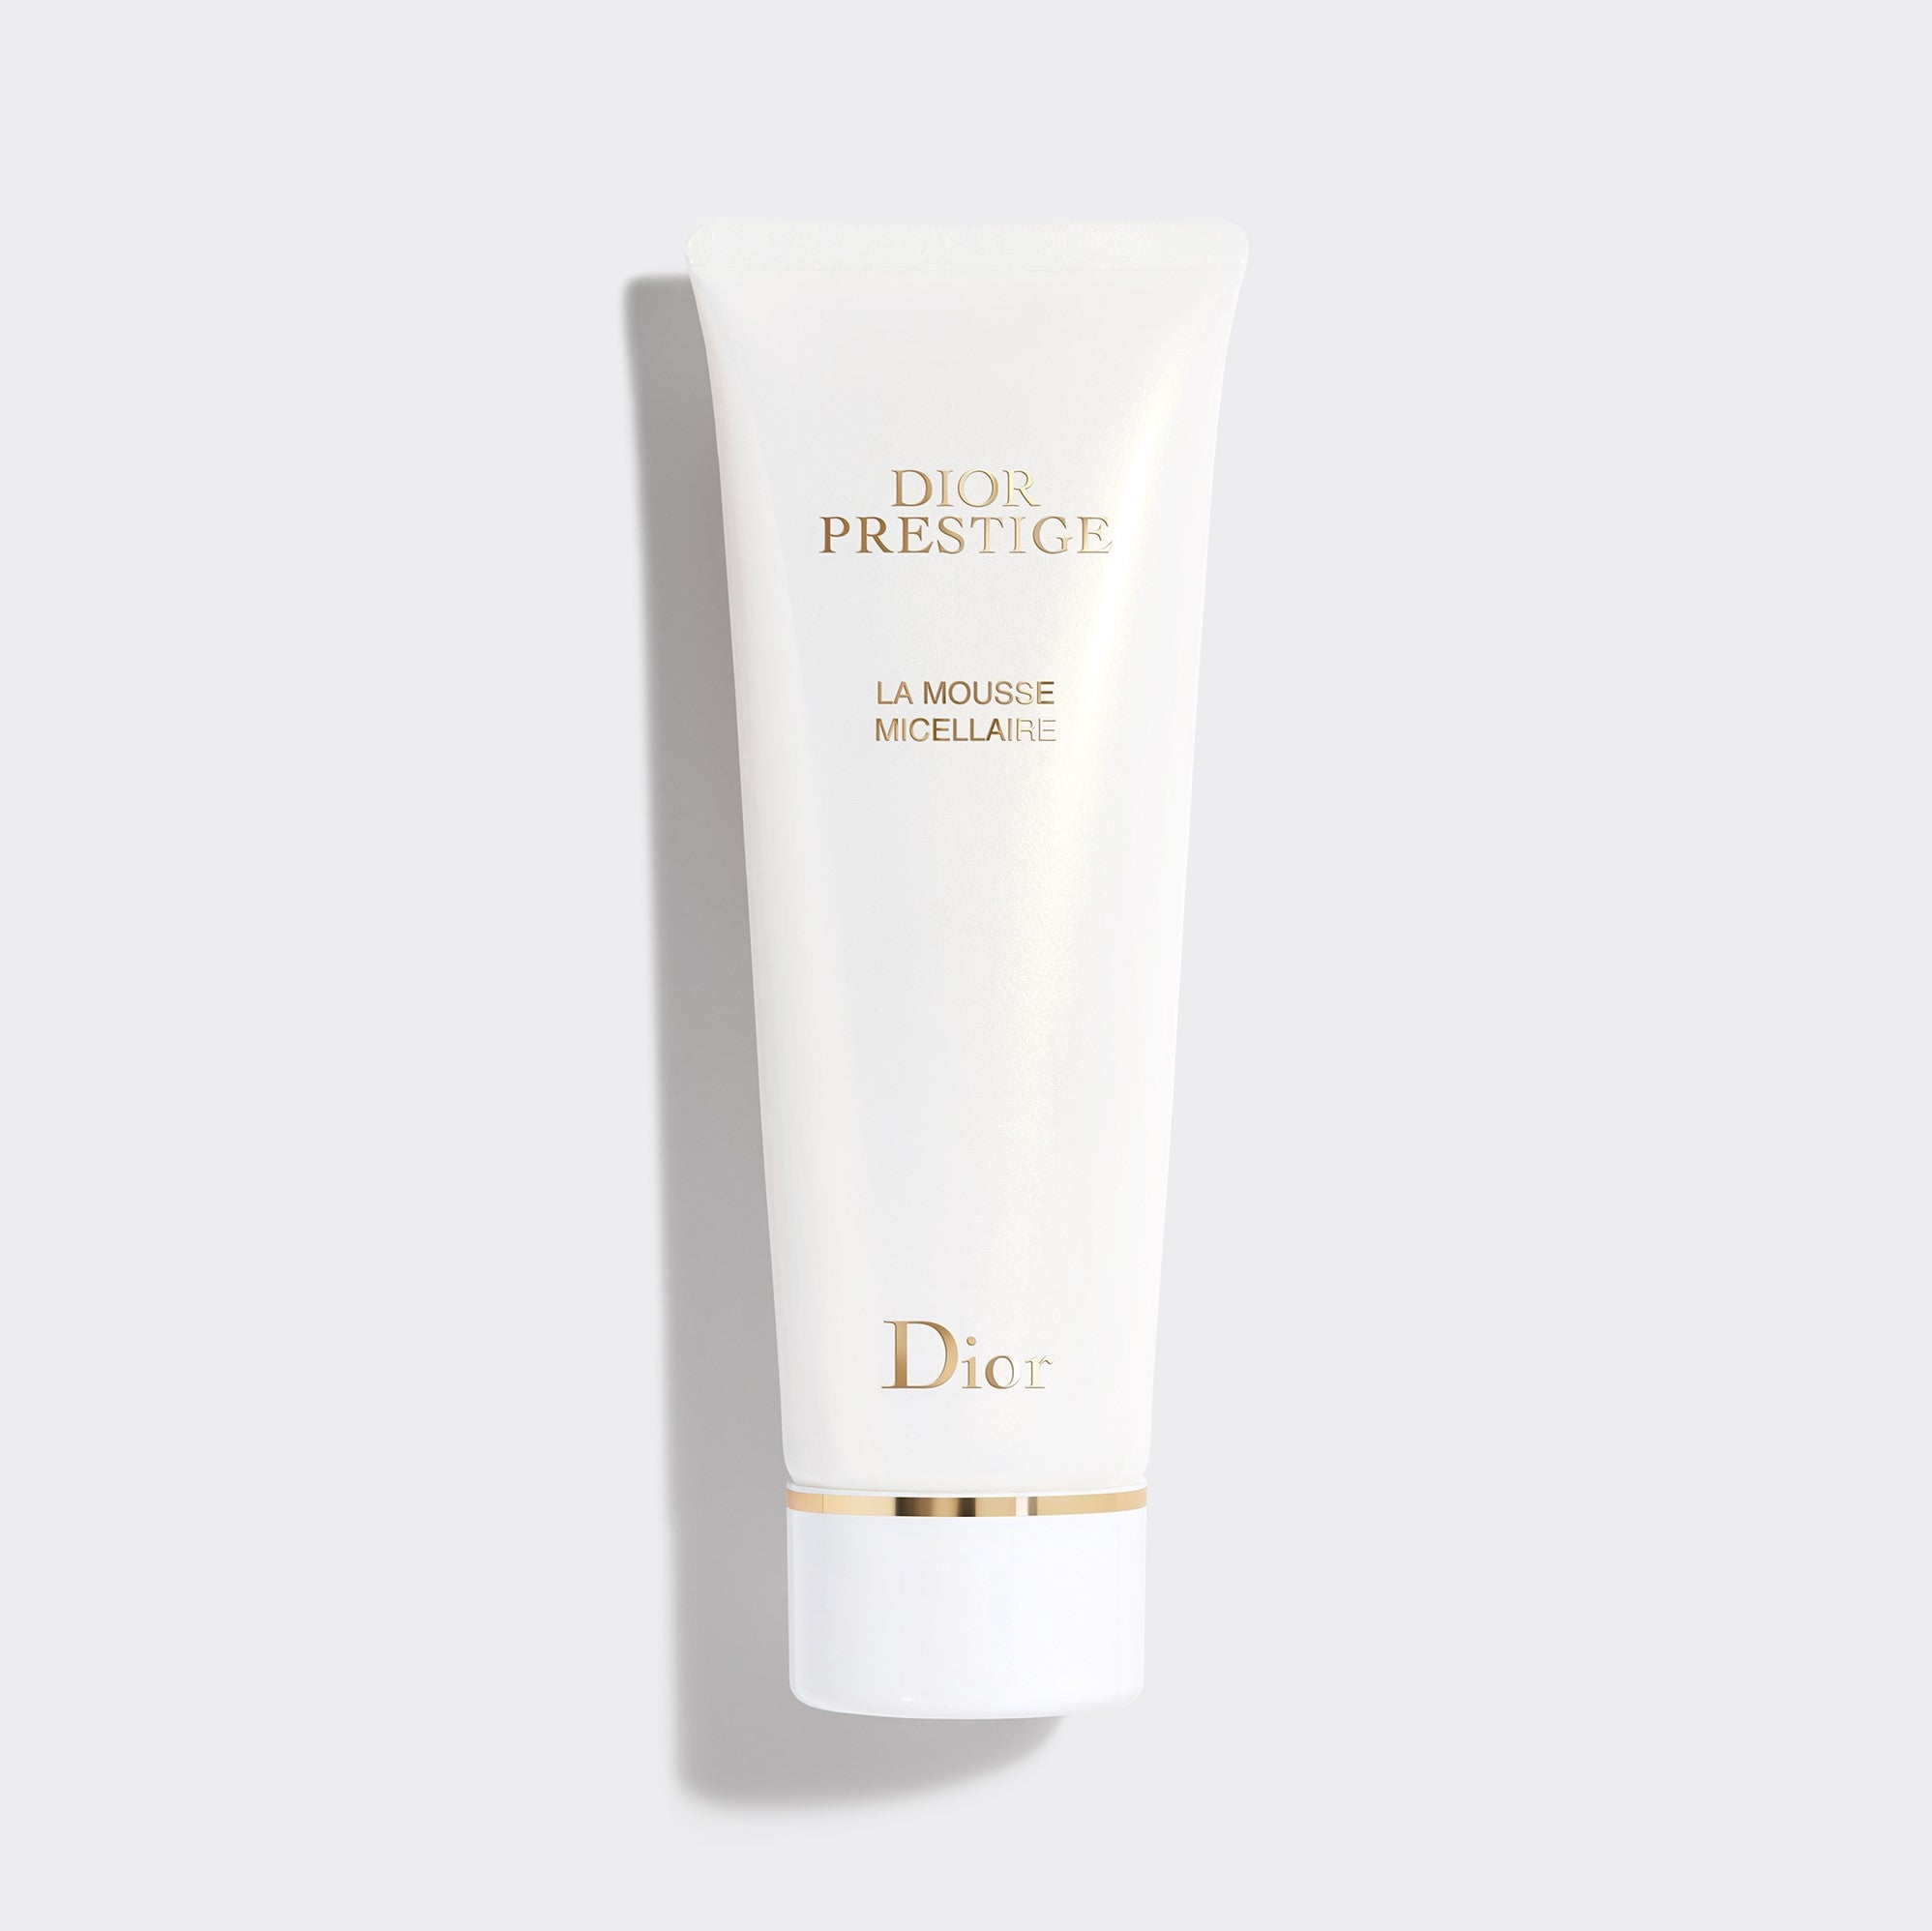 Dior Prestige La Mousse Micellaire | Face cleanser - foam texture - exceptionally gentle